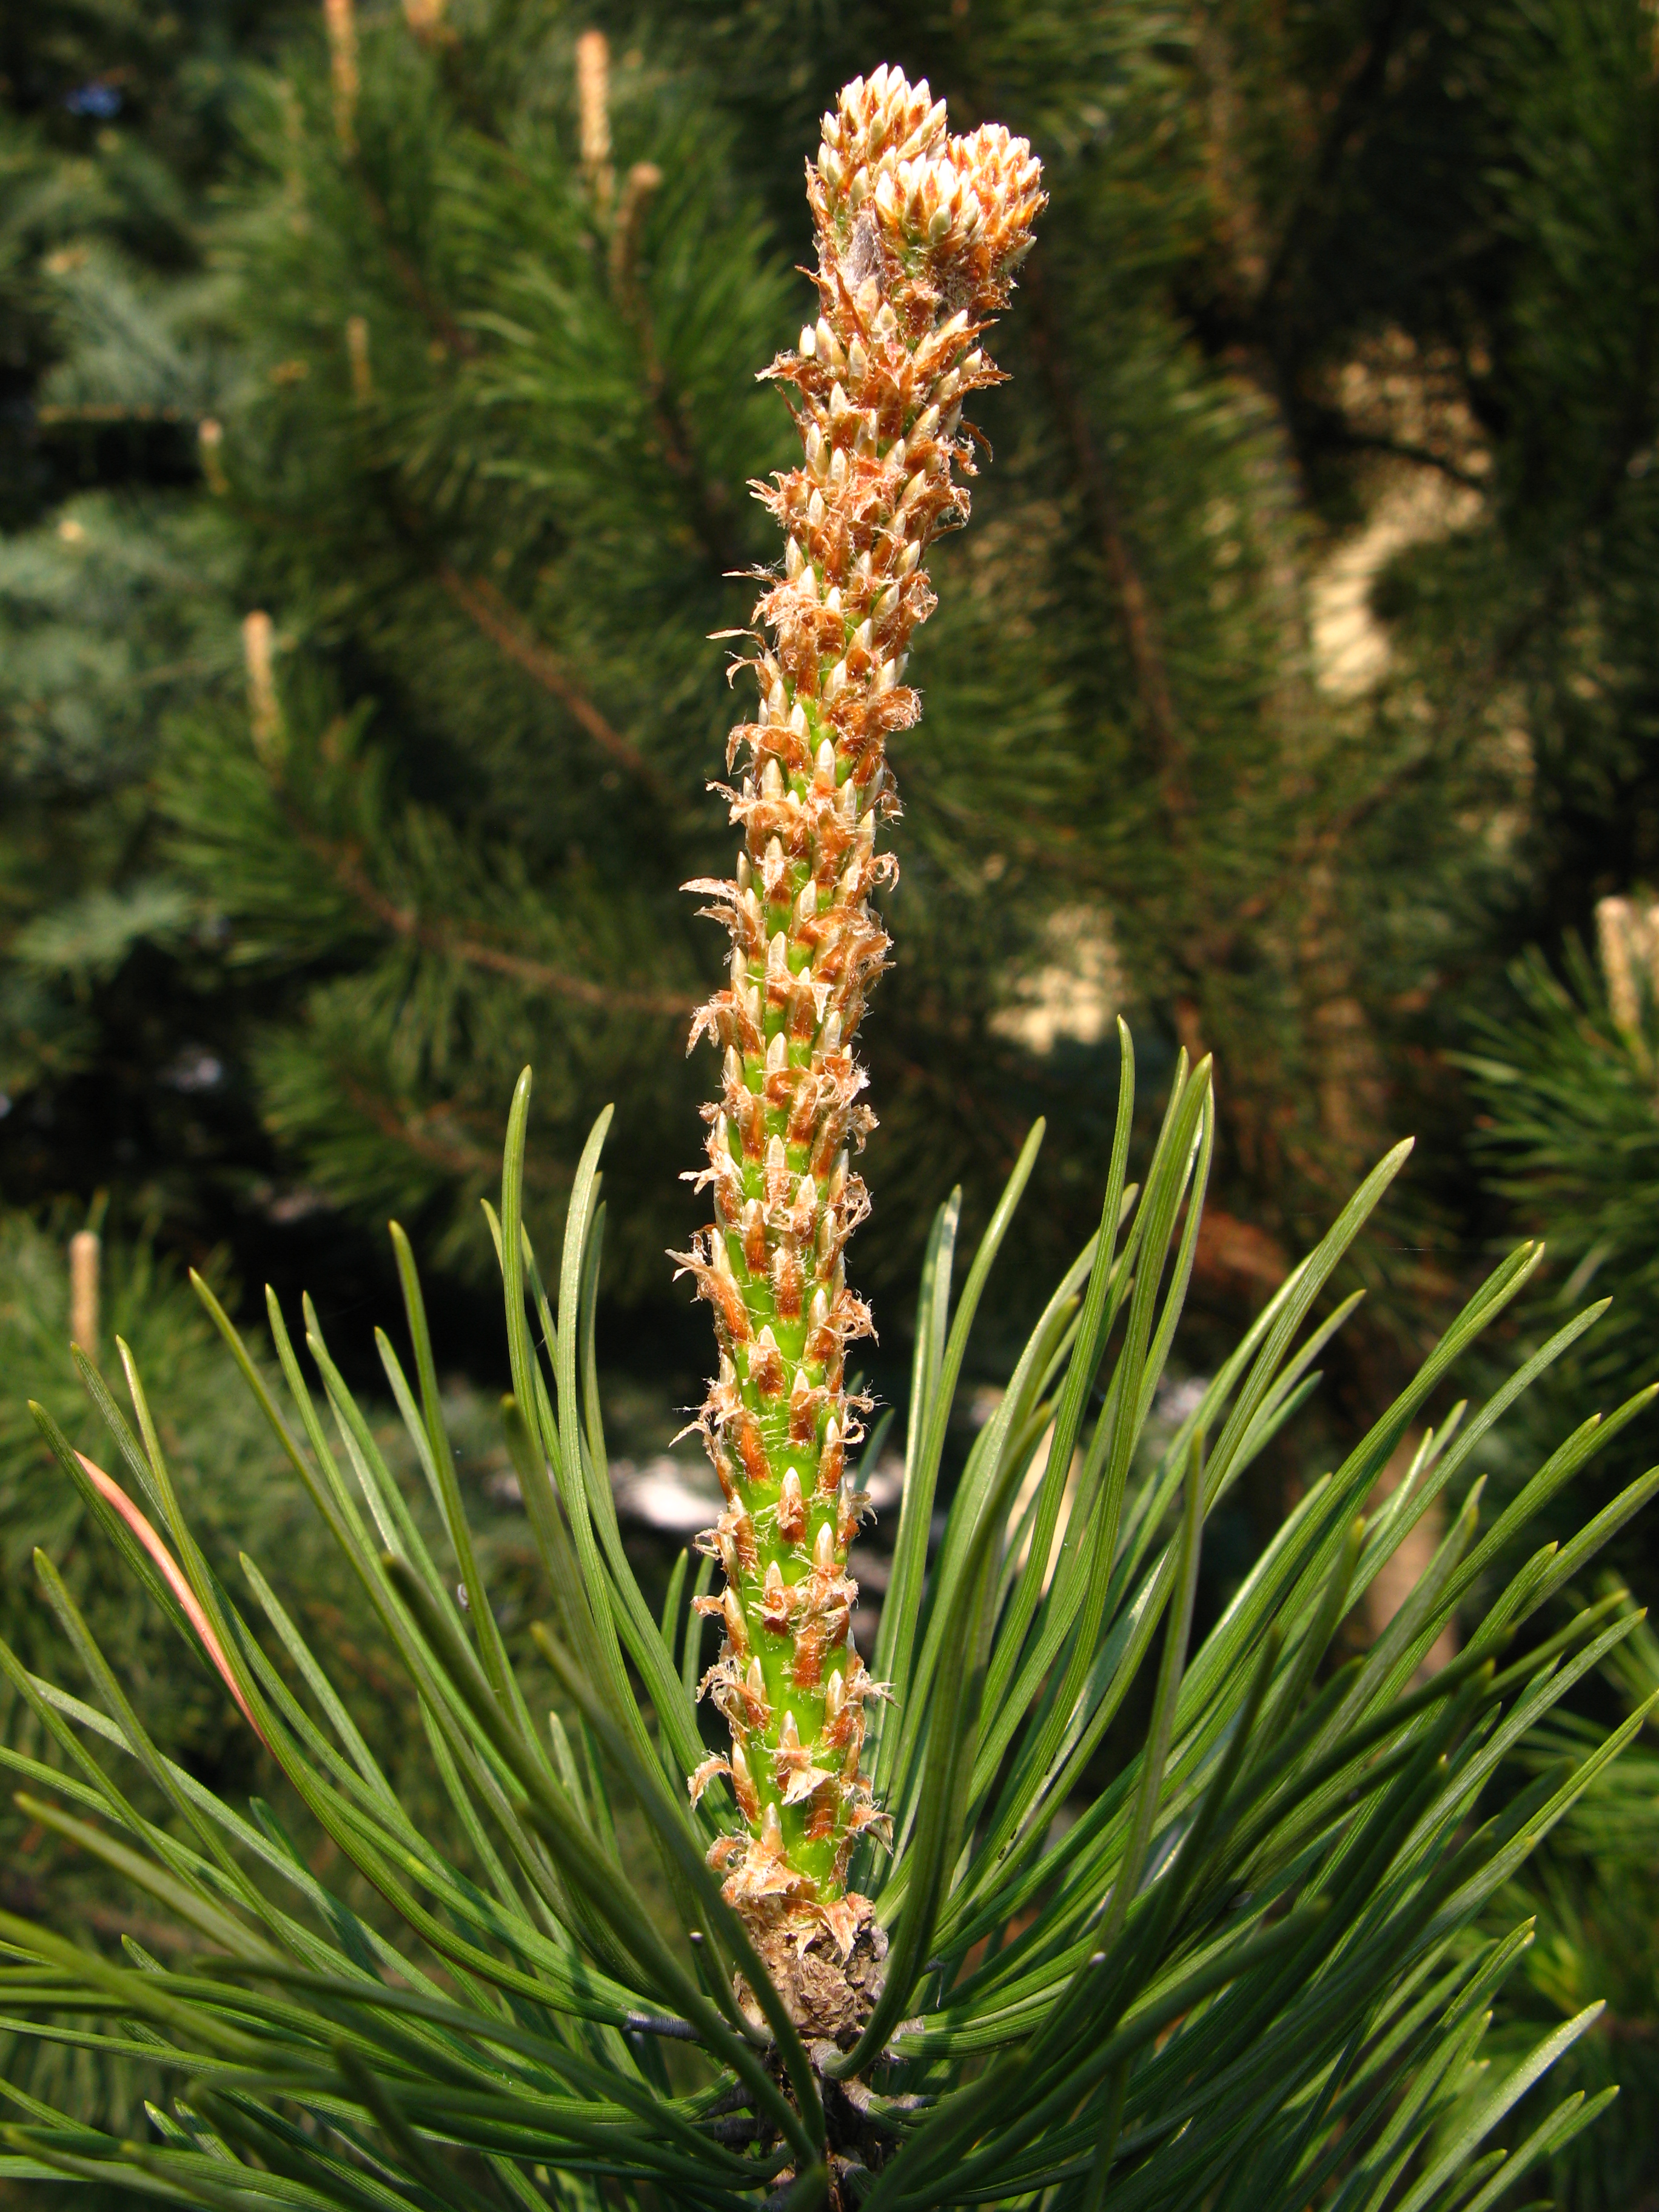 Pinus mugo nothosubsp. rotundata shoots